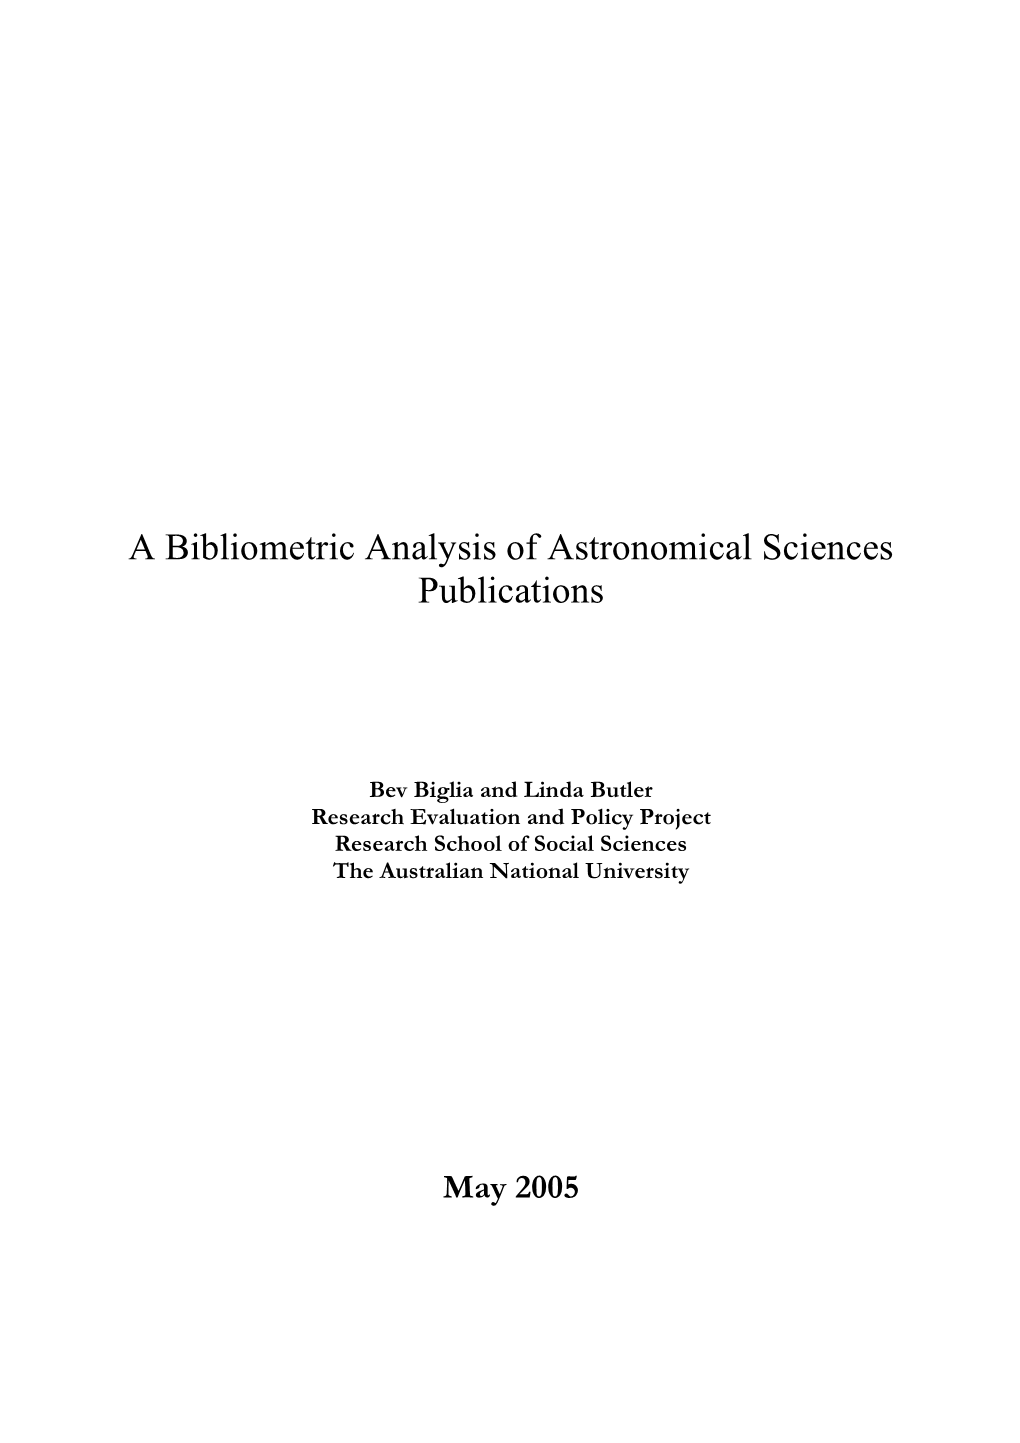 A Bibliometric Analysis of Astronomical Sciences Publications